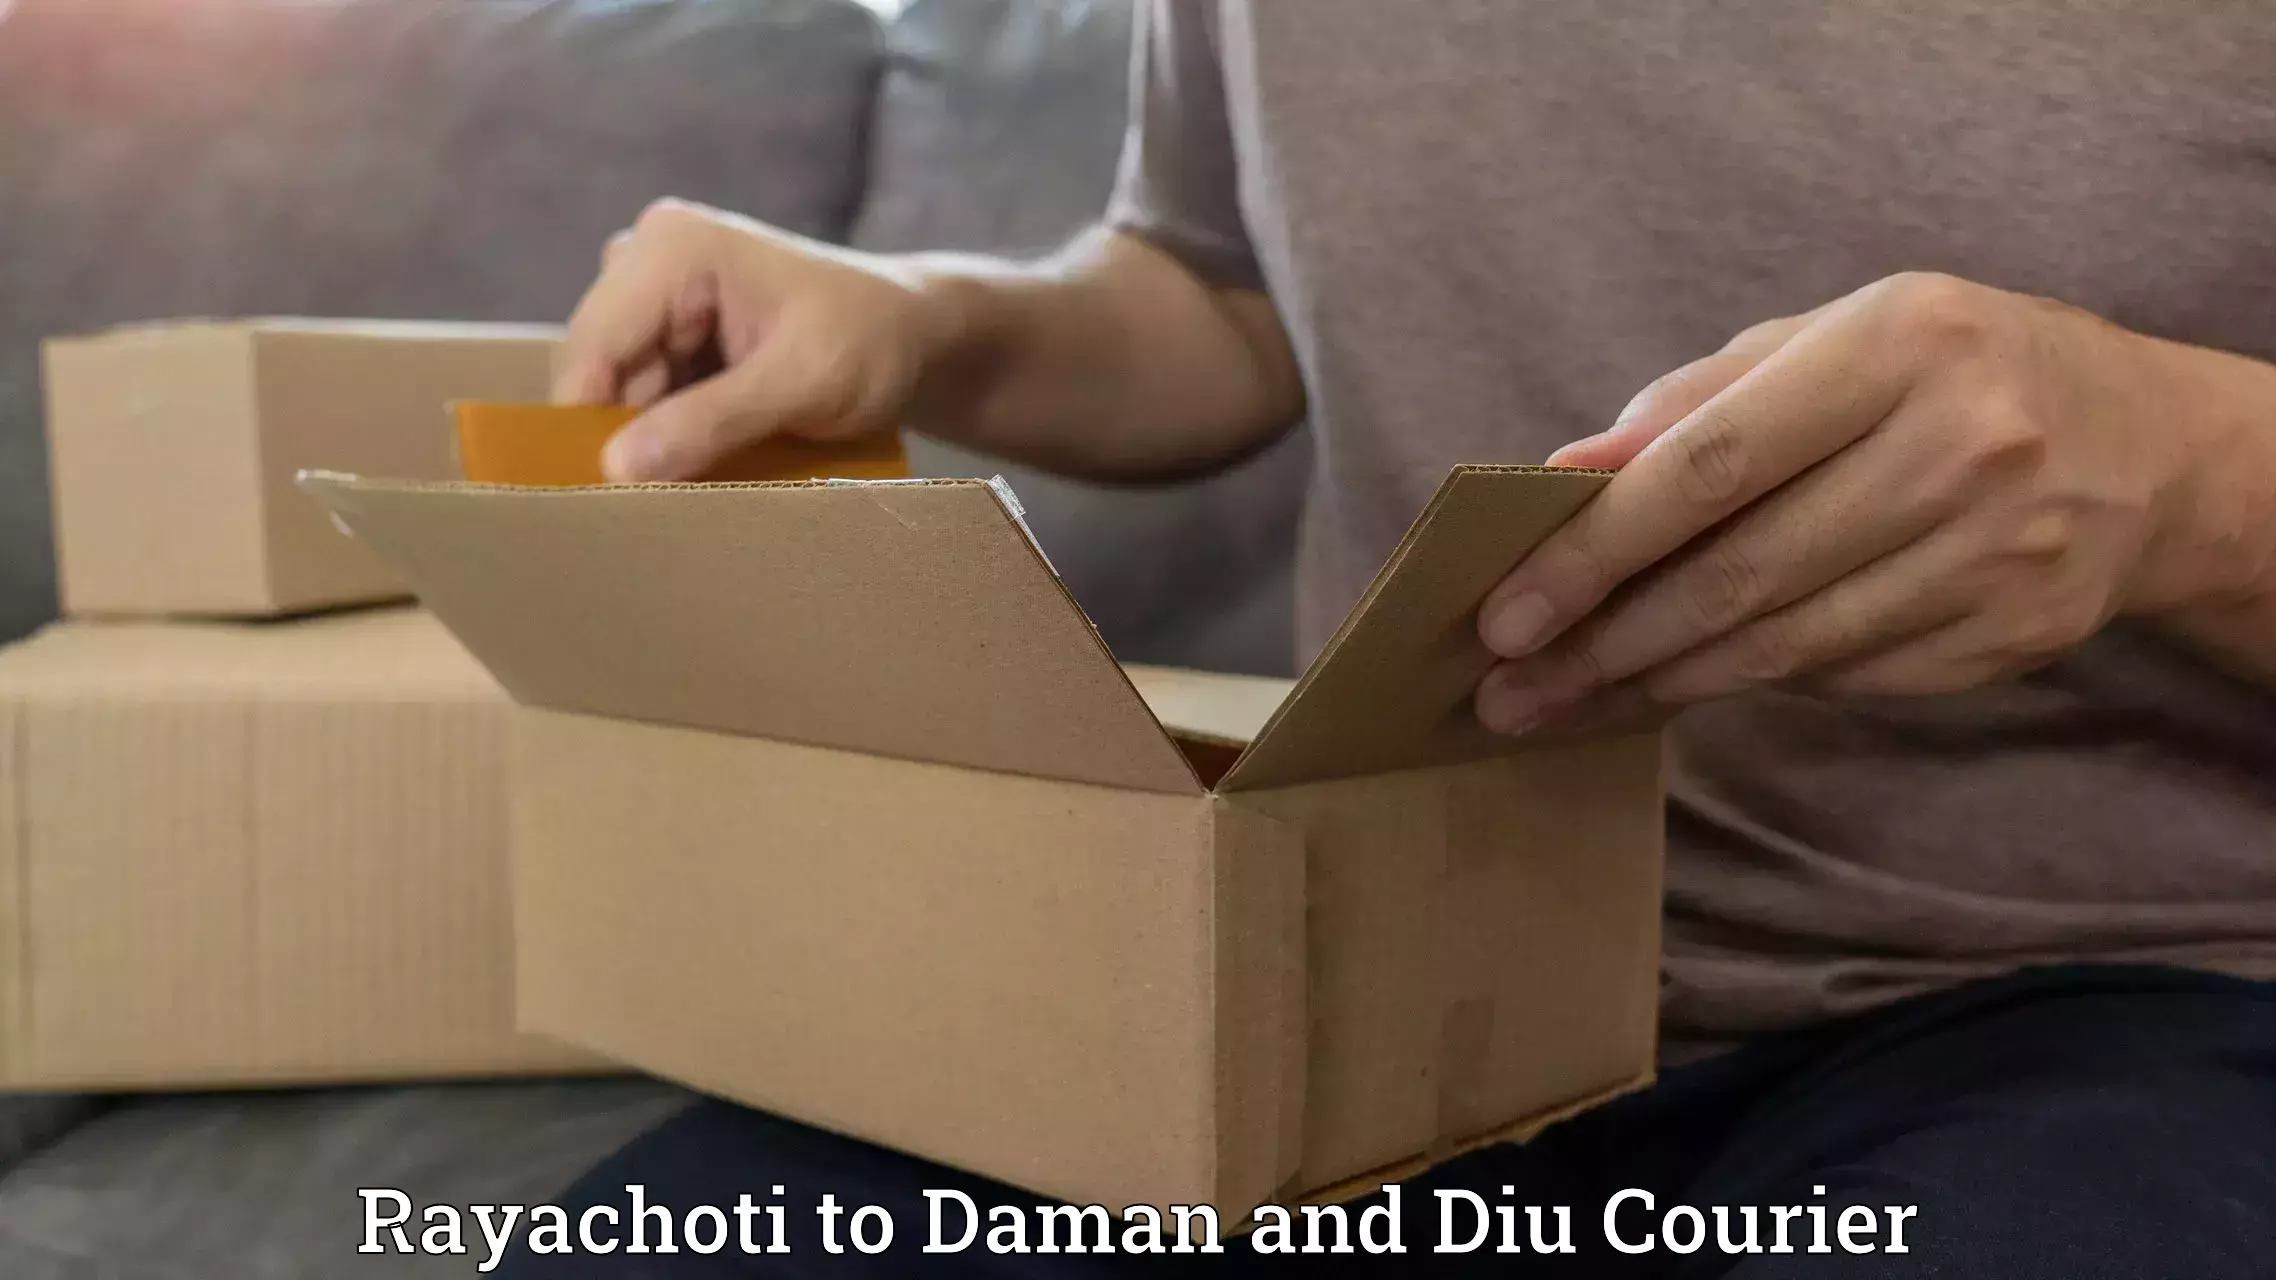 Courier service comparison Rayachoti to Daman and Diu